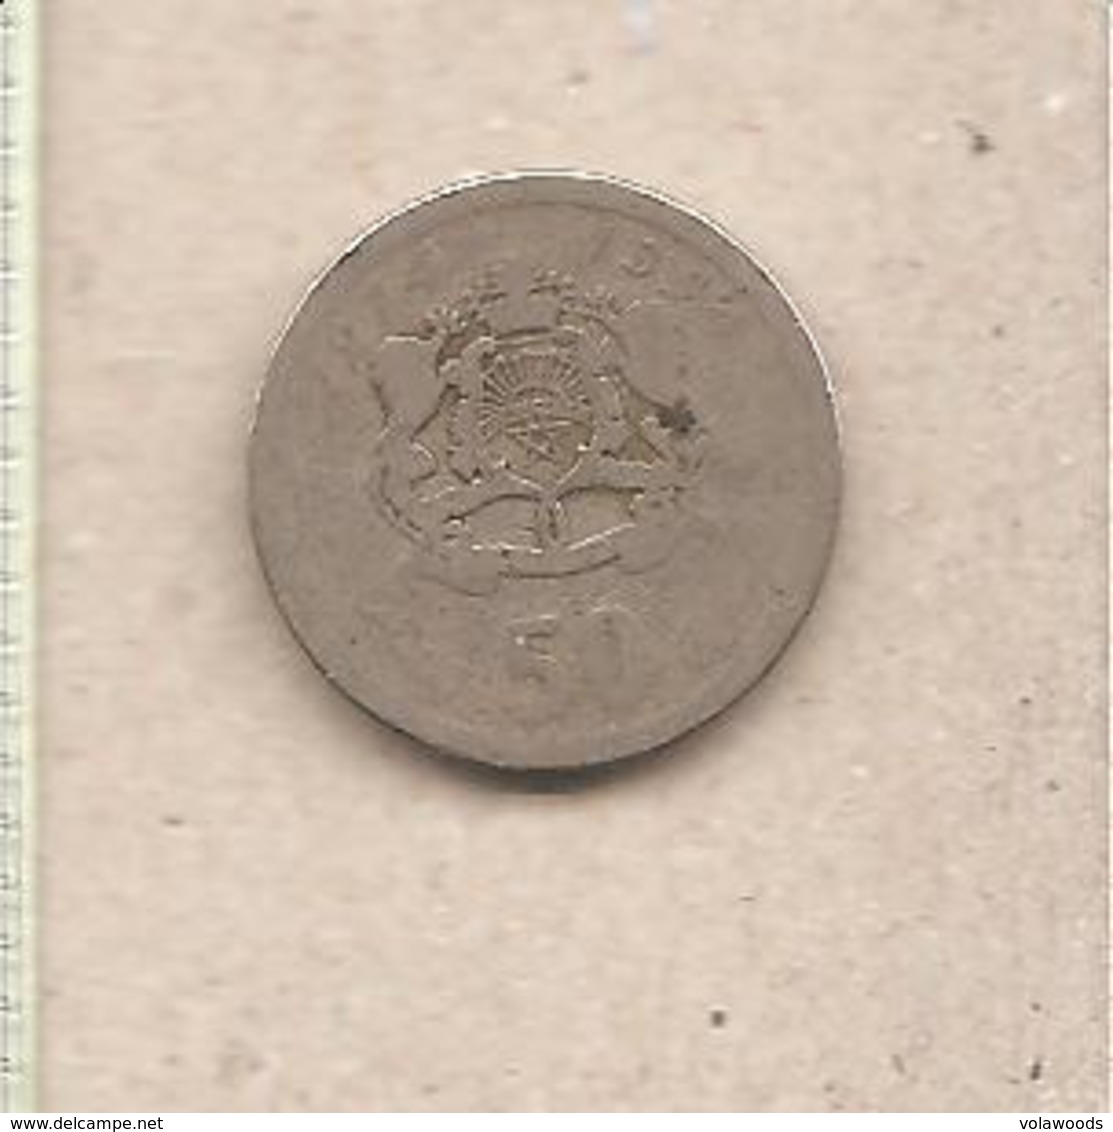 Marocco - Moneta Circolata Da 50 Santimat - 1974 - Maroc